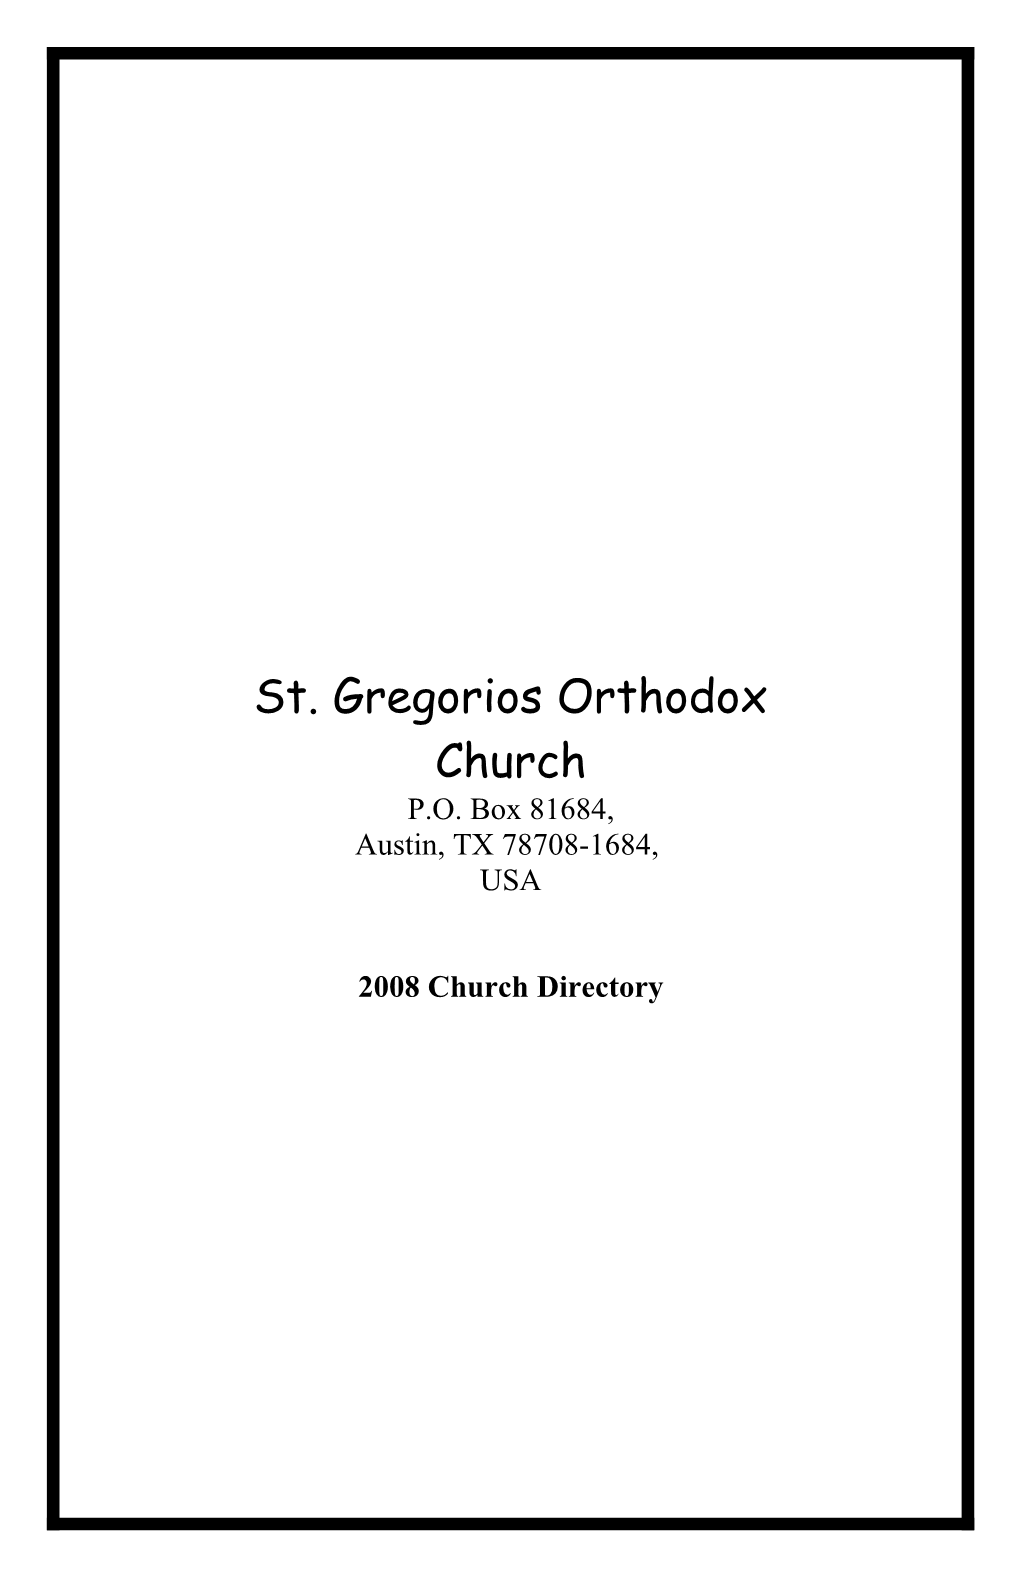 2008 Church Directory